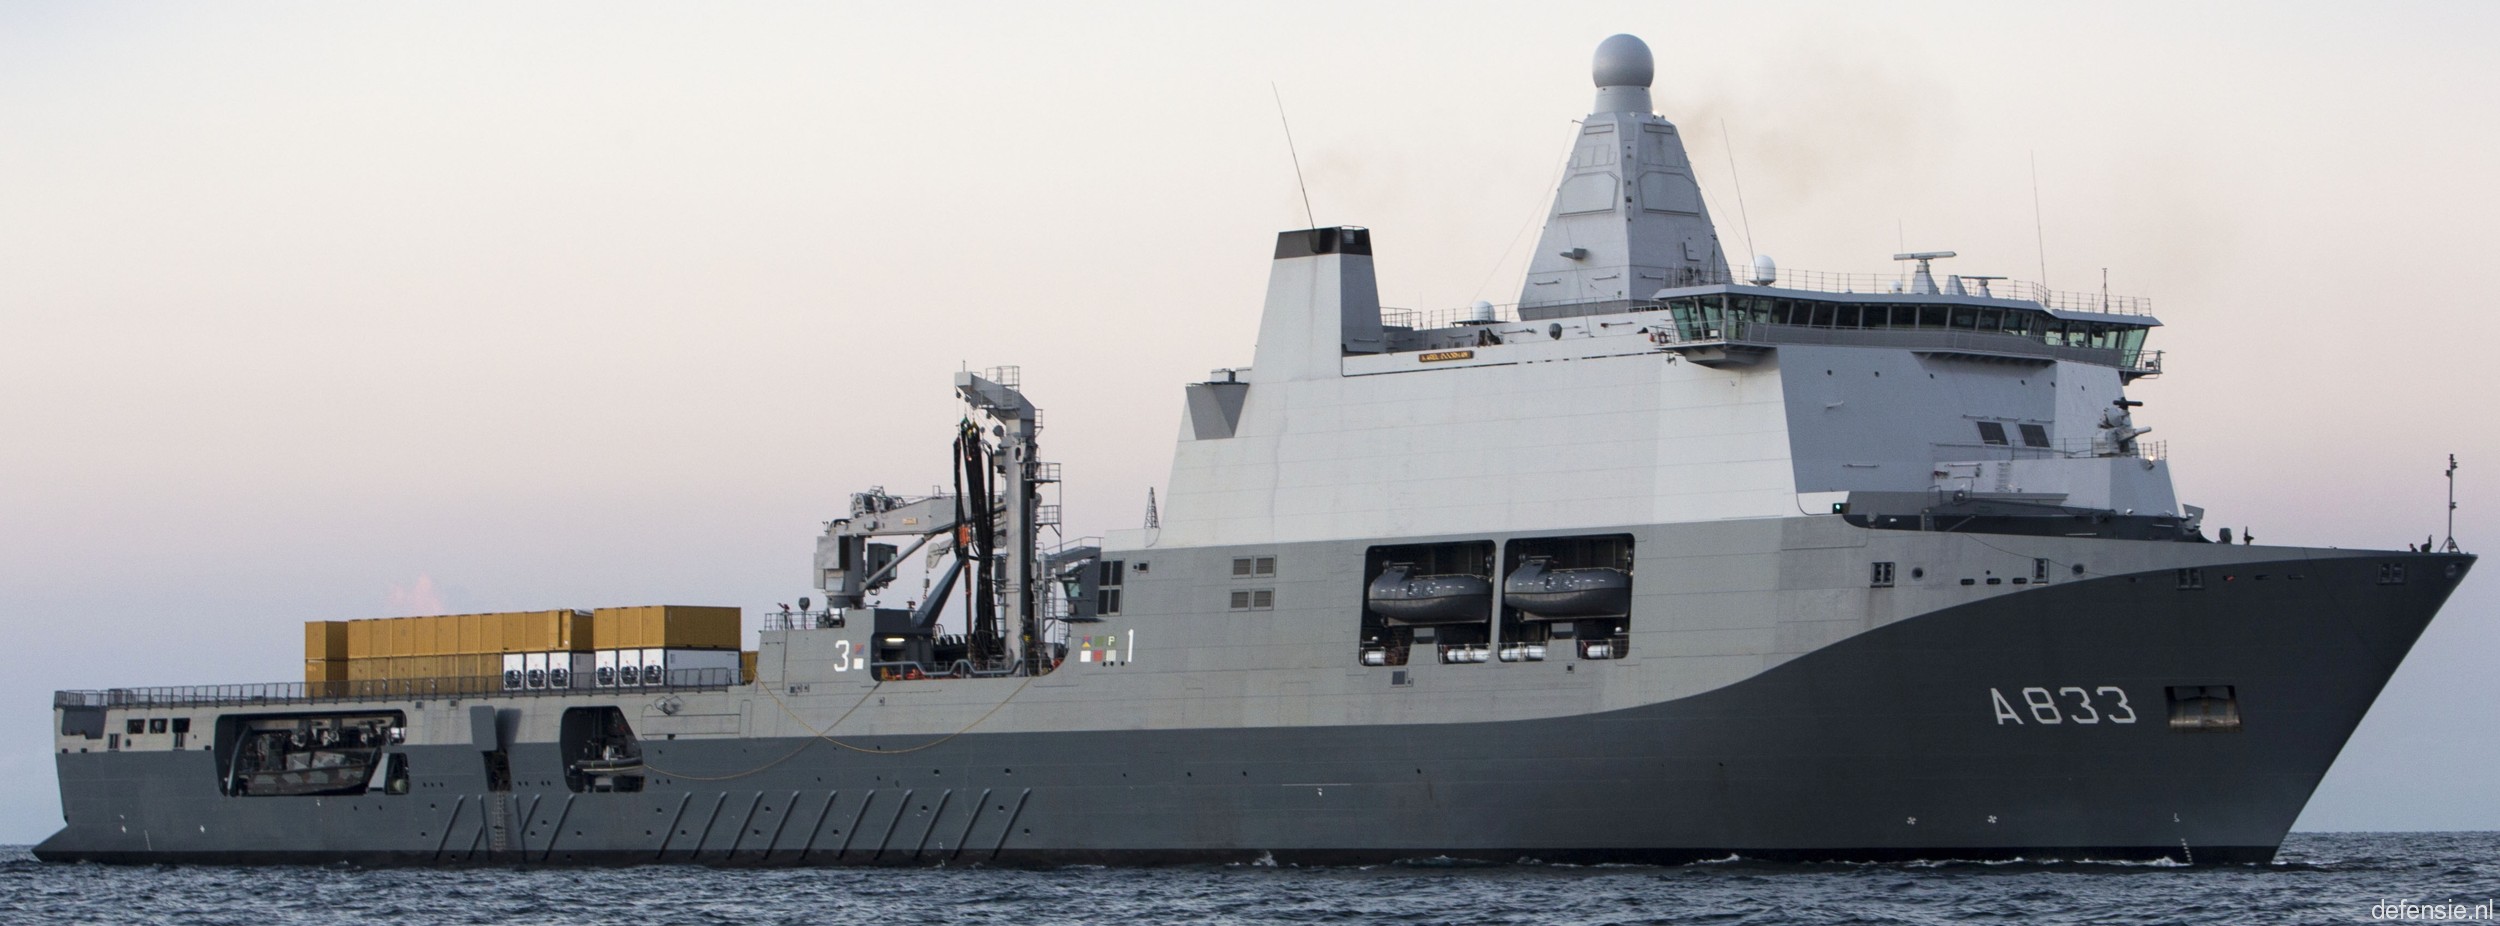 a-833 hnlms karel doorman joint support ship royal netherlands navy koninklijke marine 44